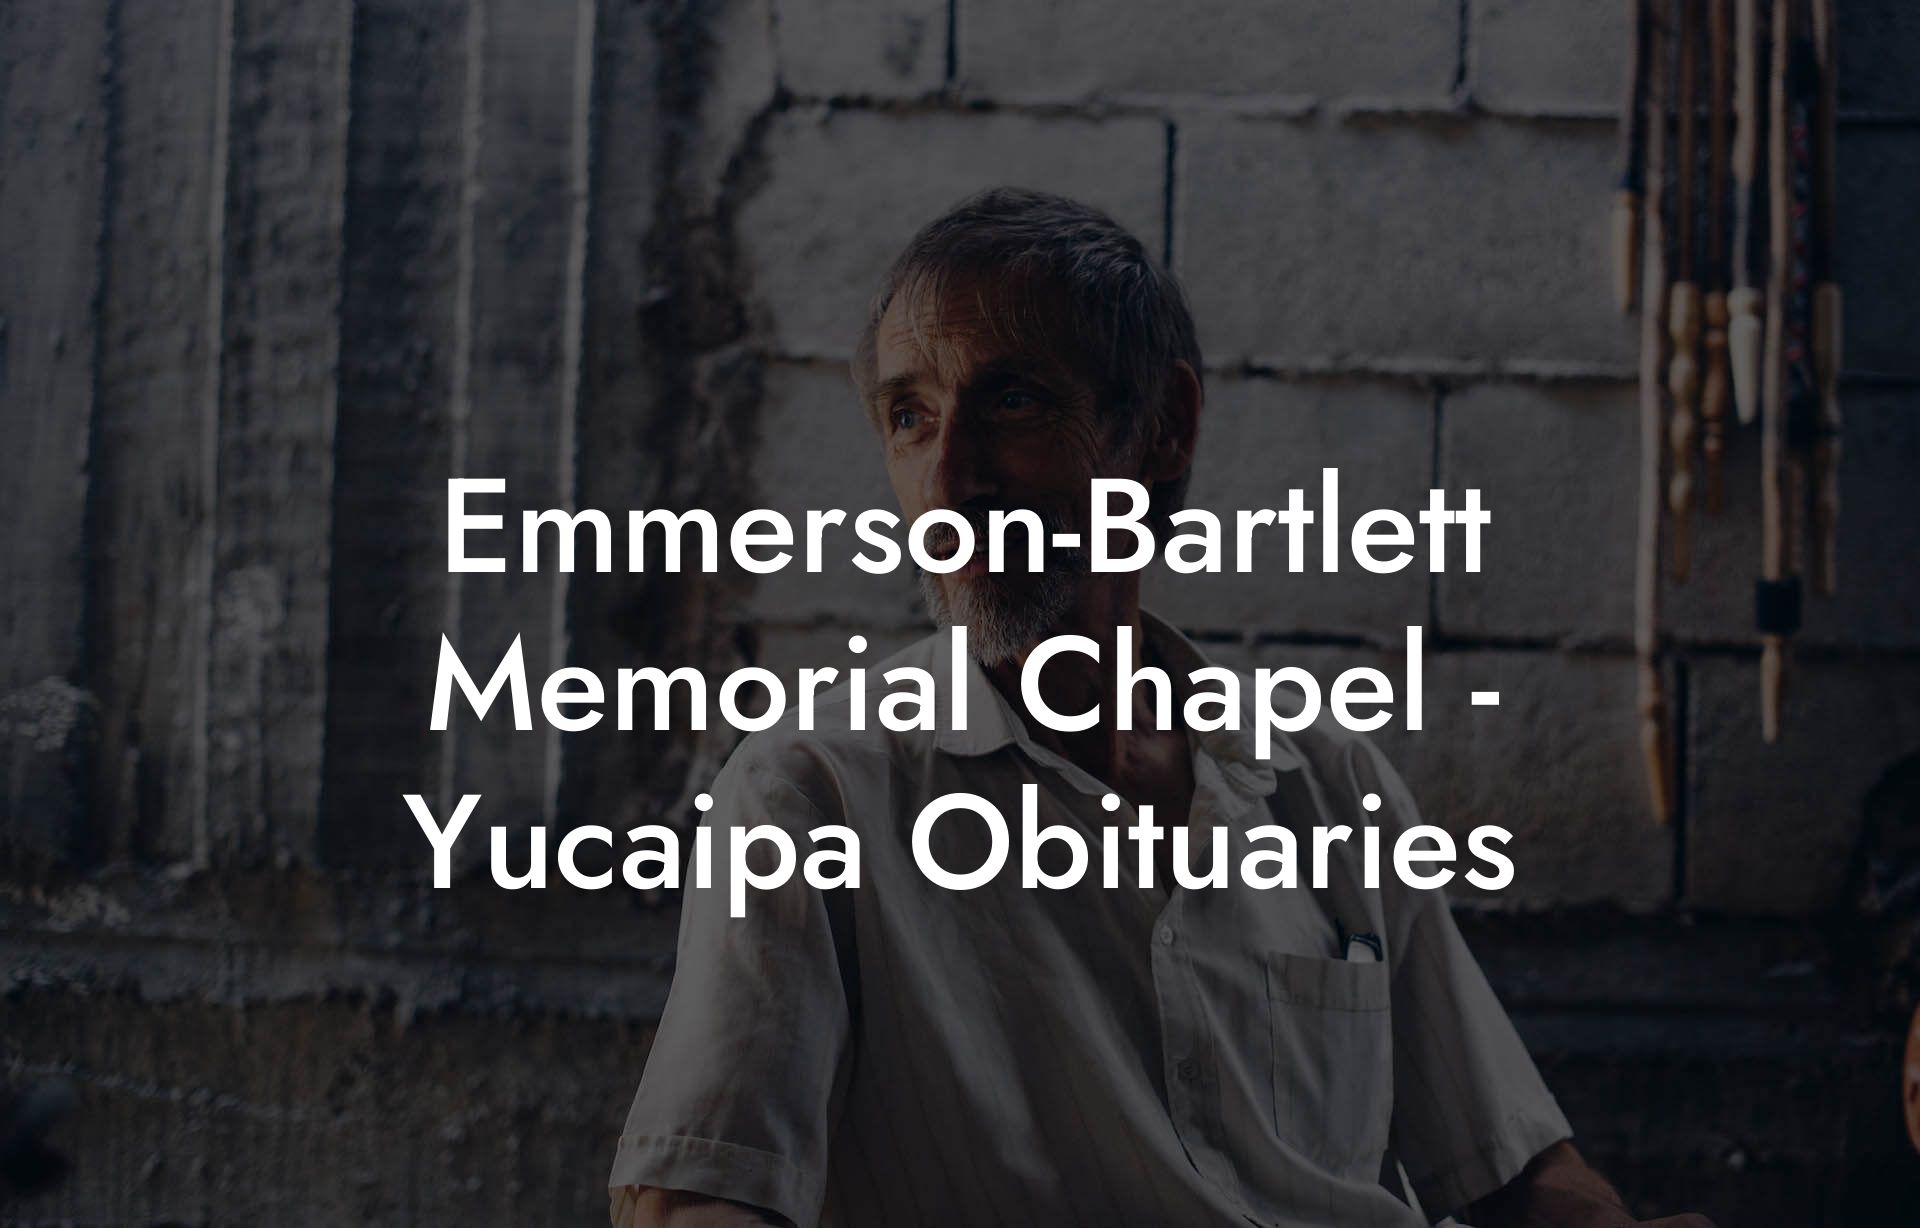 Emmerson-Bartlett Memorial Chapel - Yucaipa Obituaries